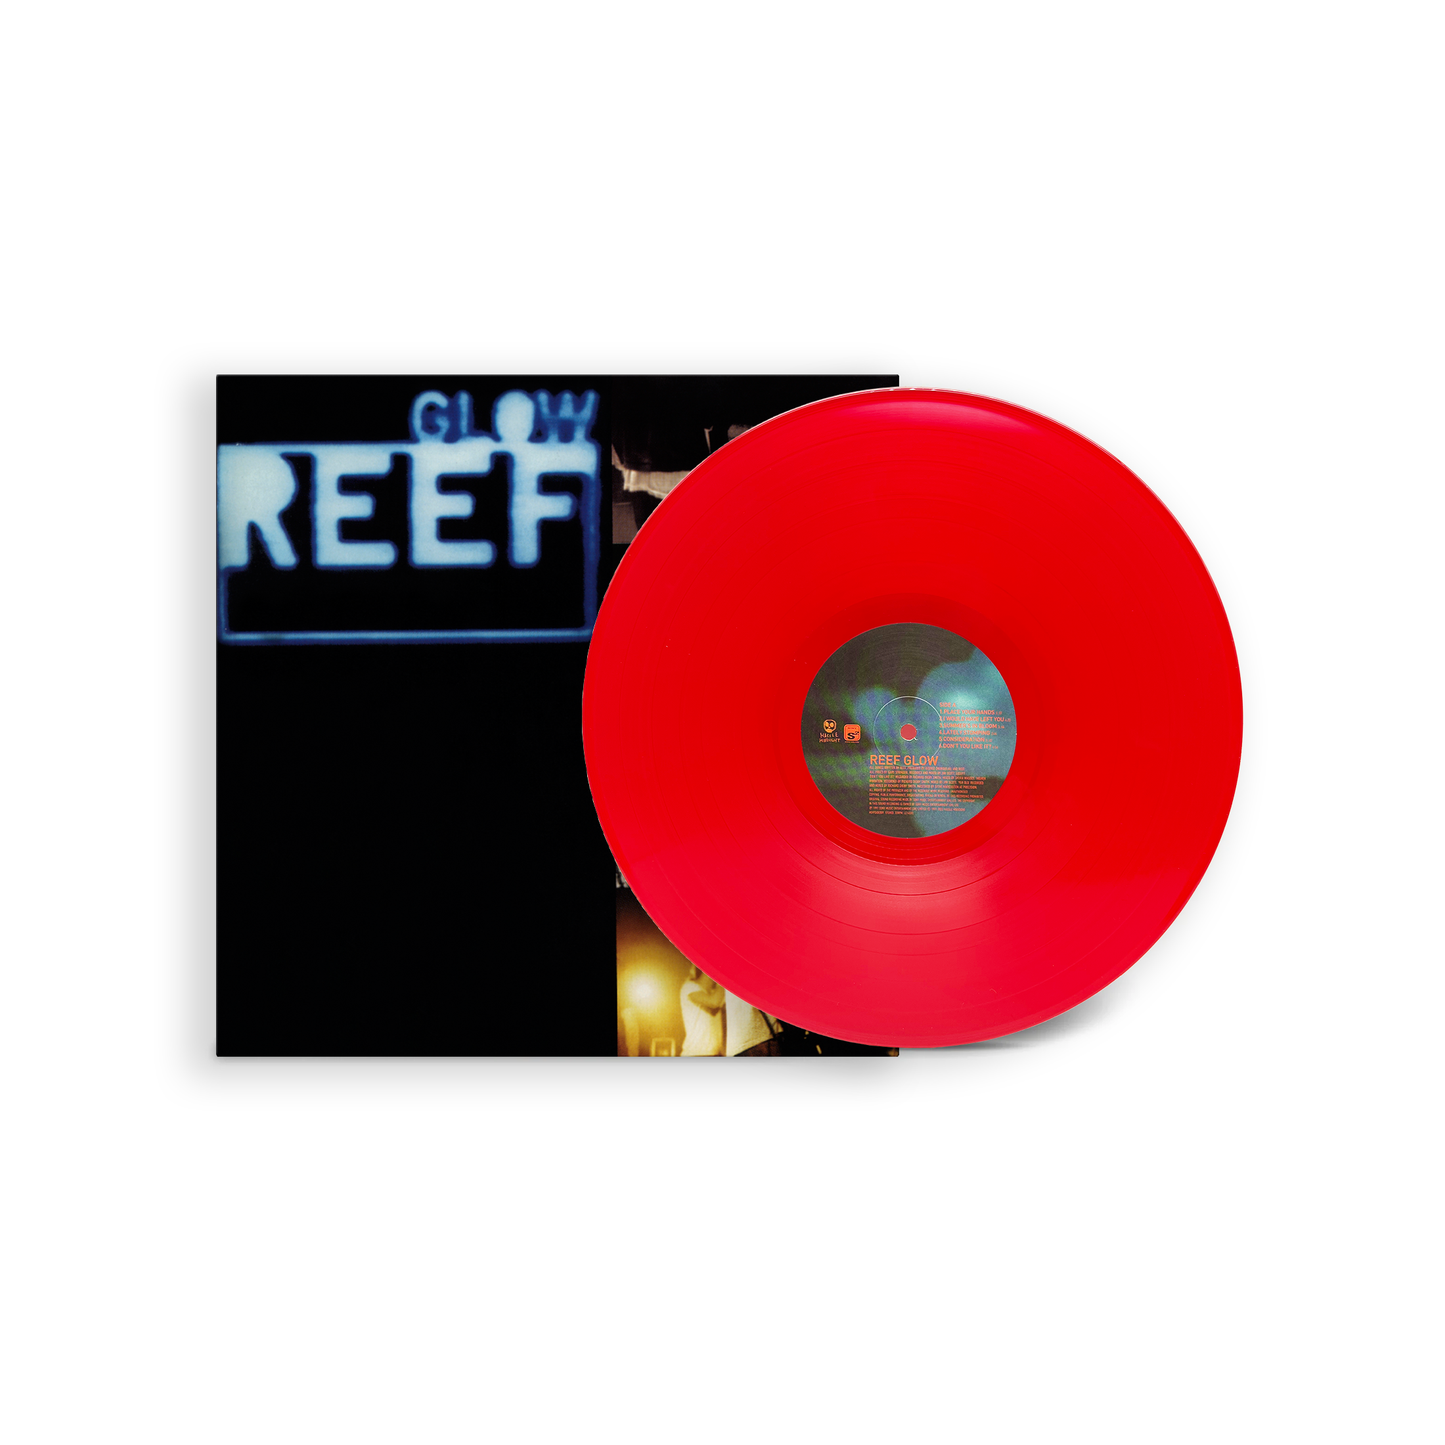 Reef 'Glow'